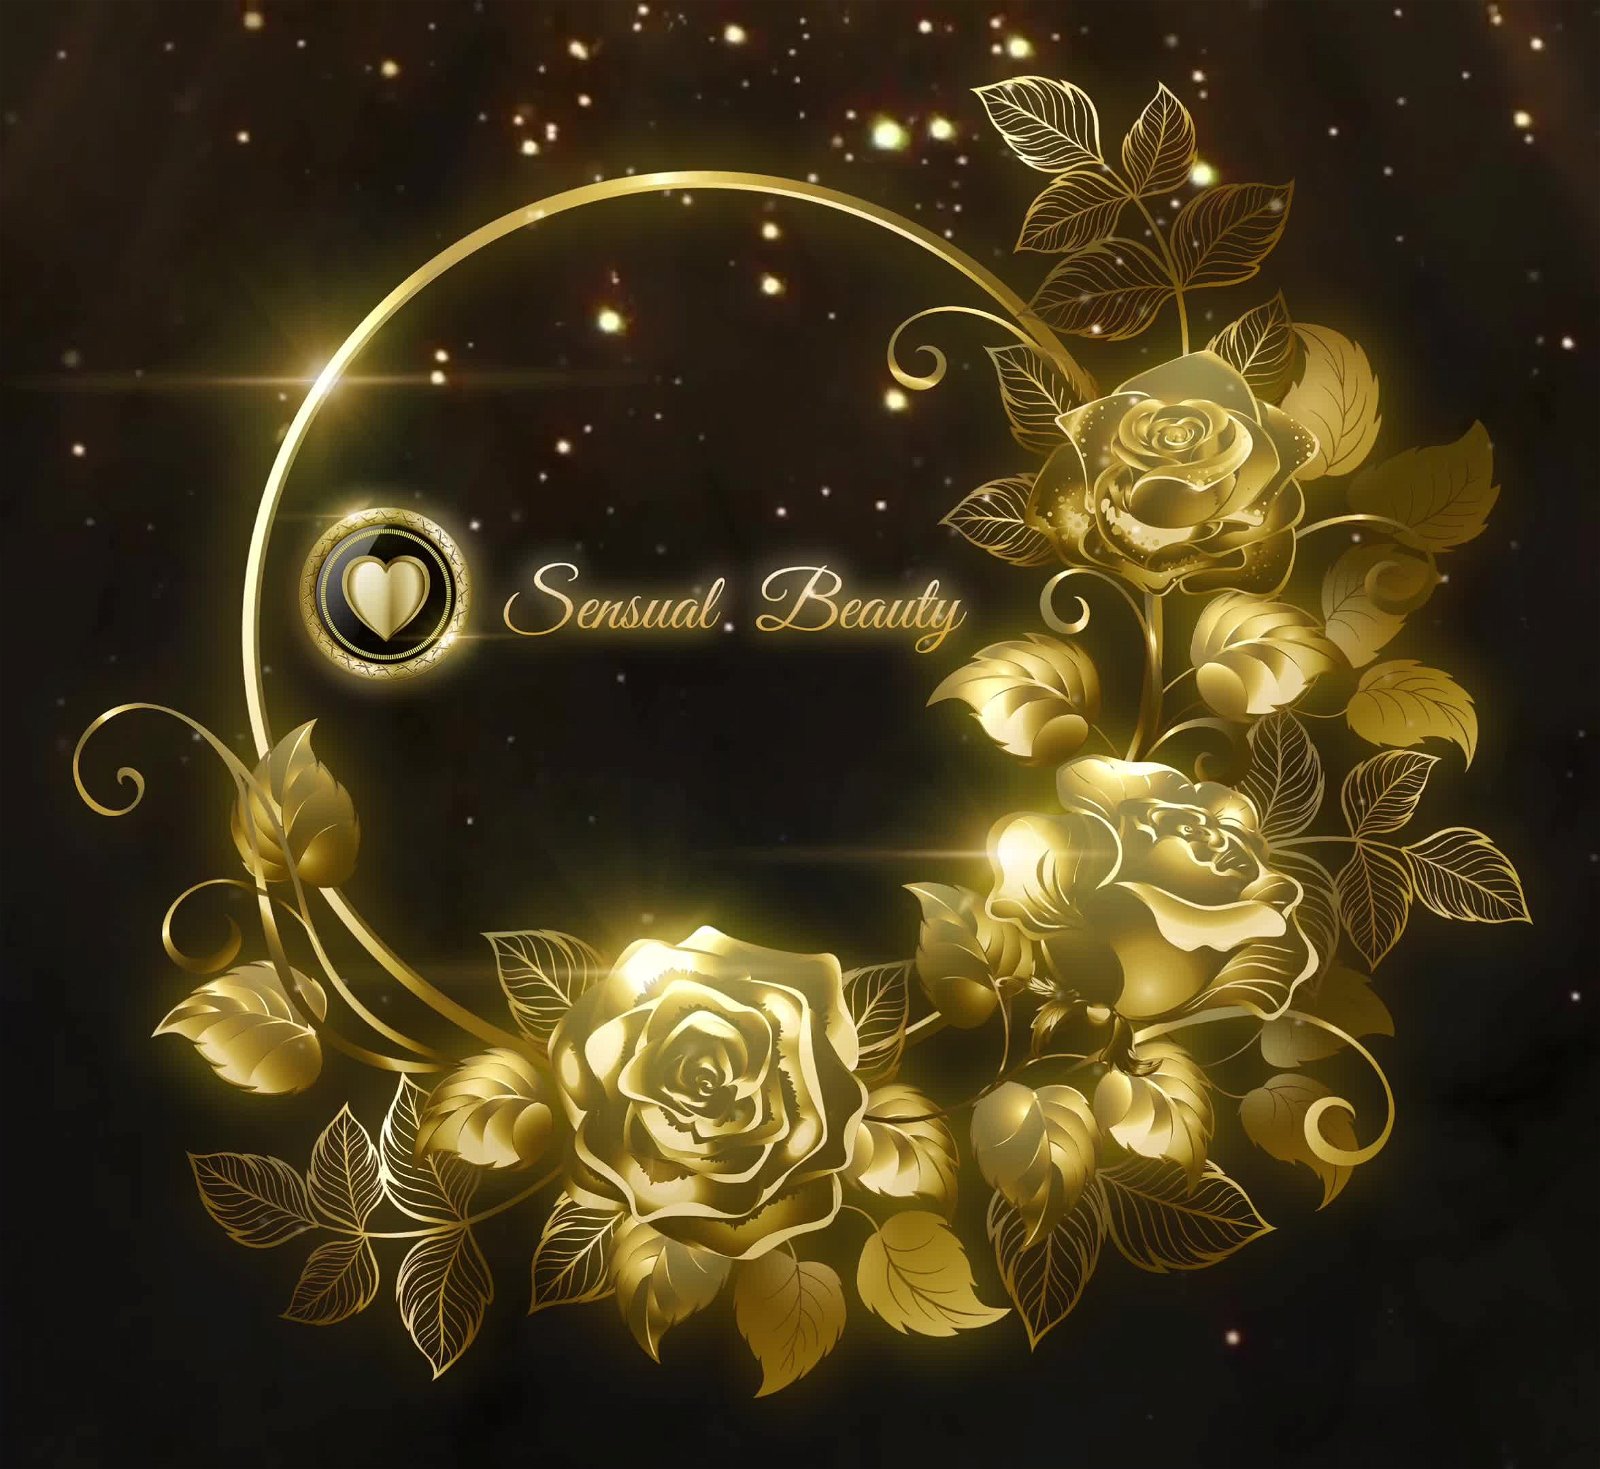 sensualbeauty-logo-gold-roses